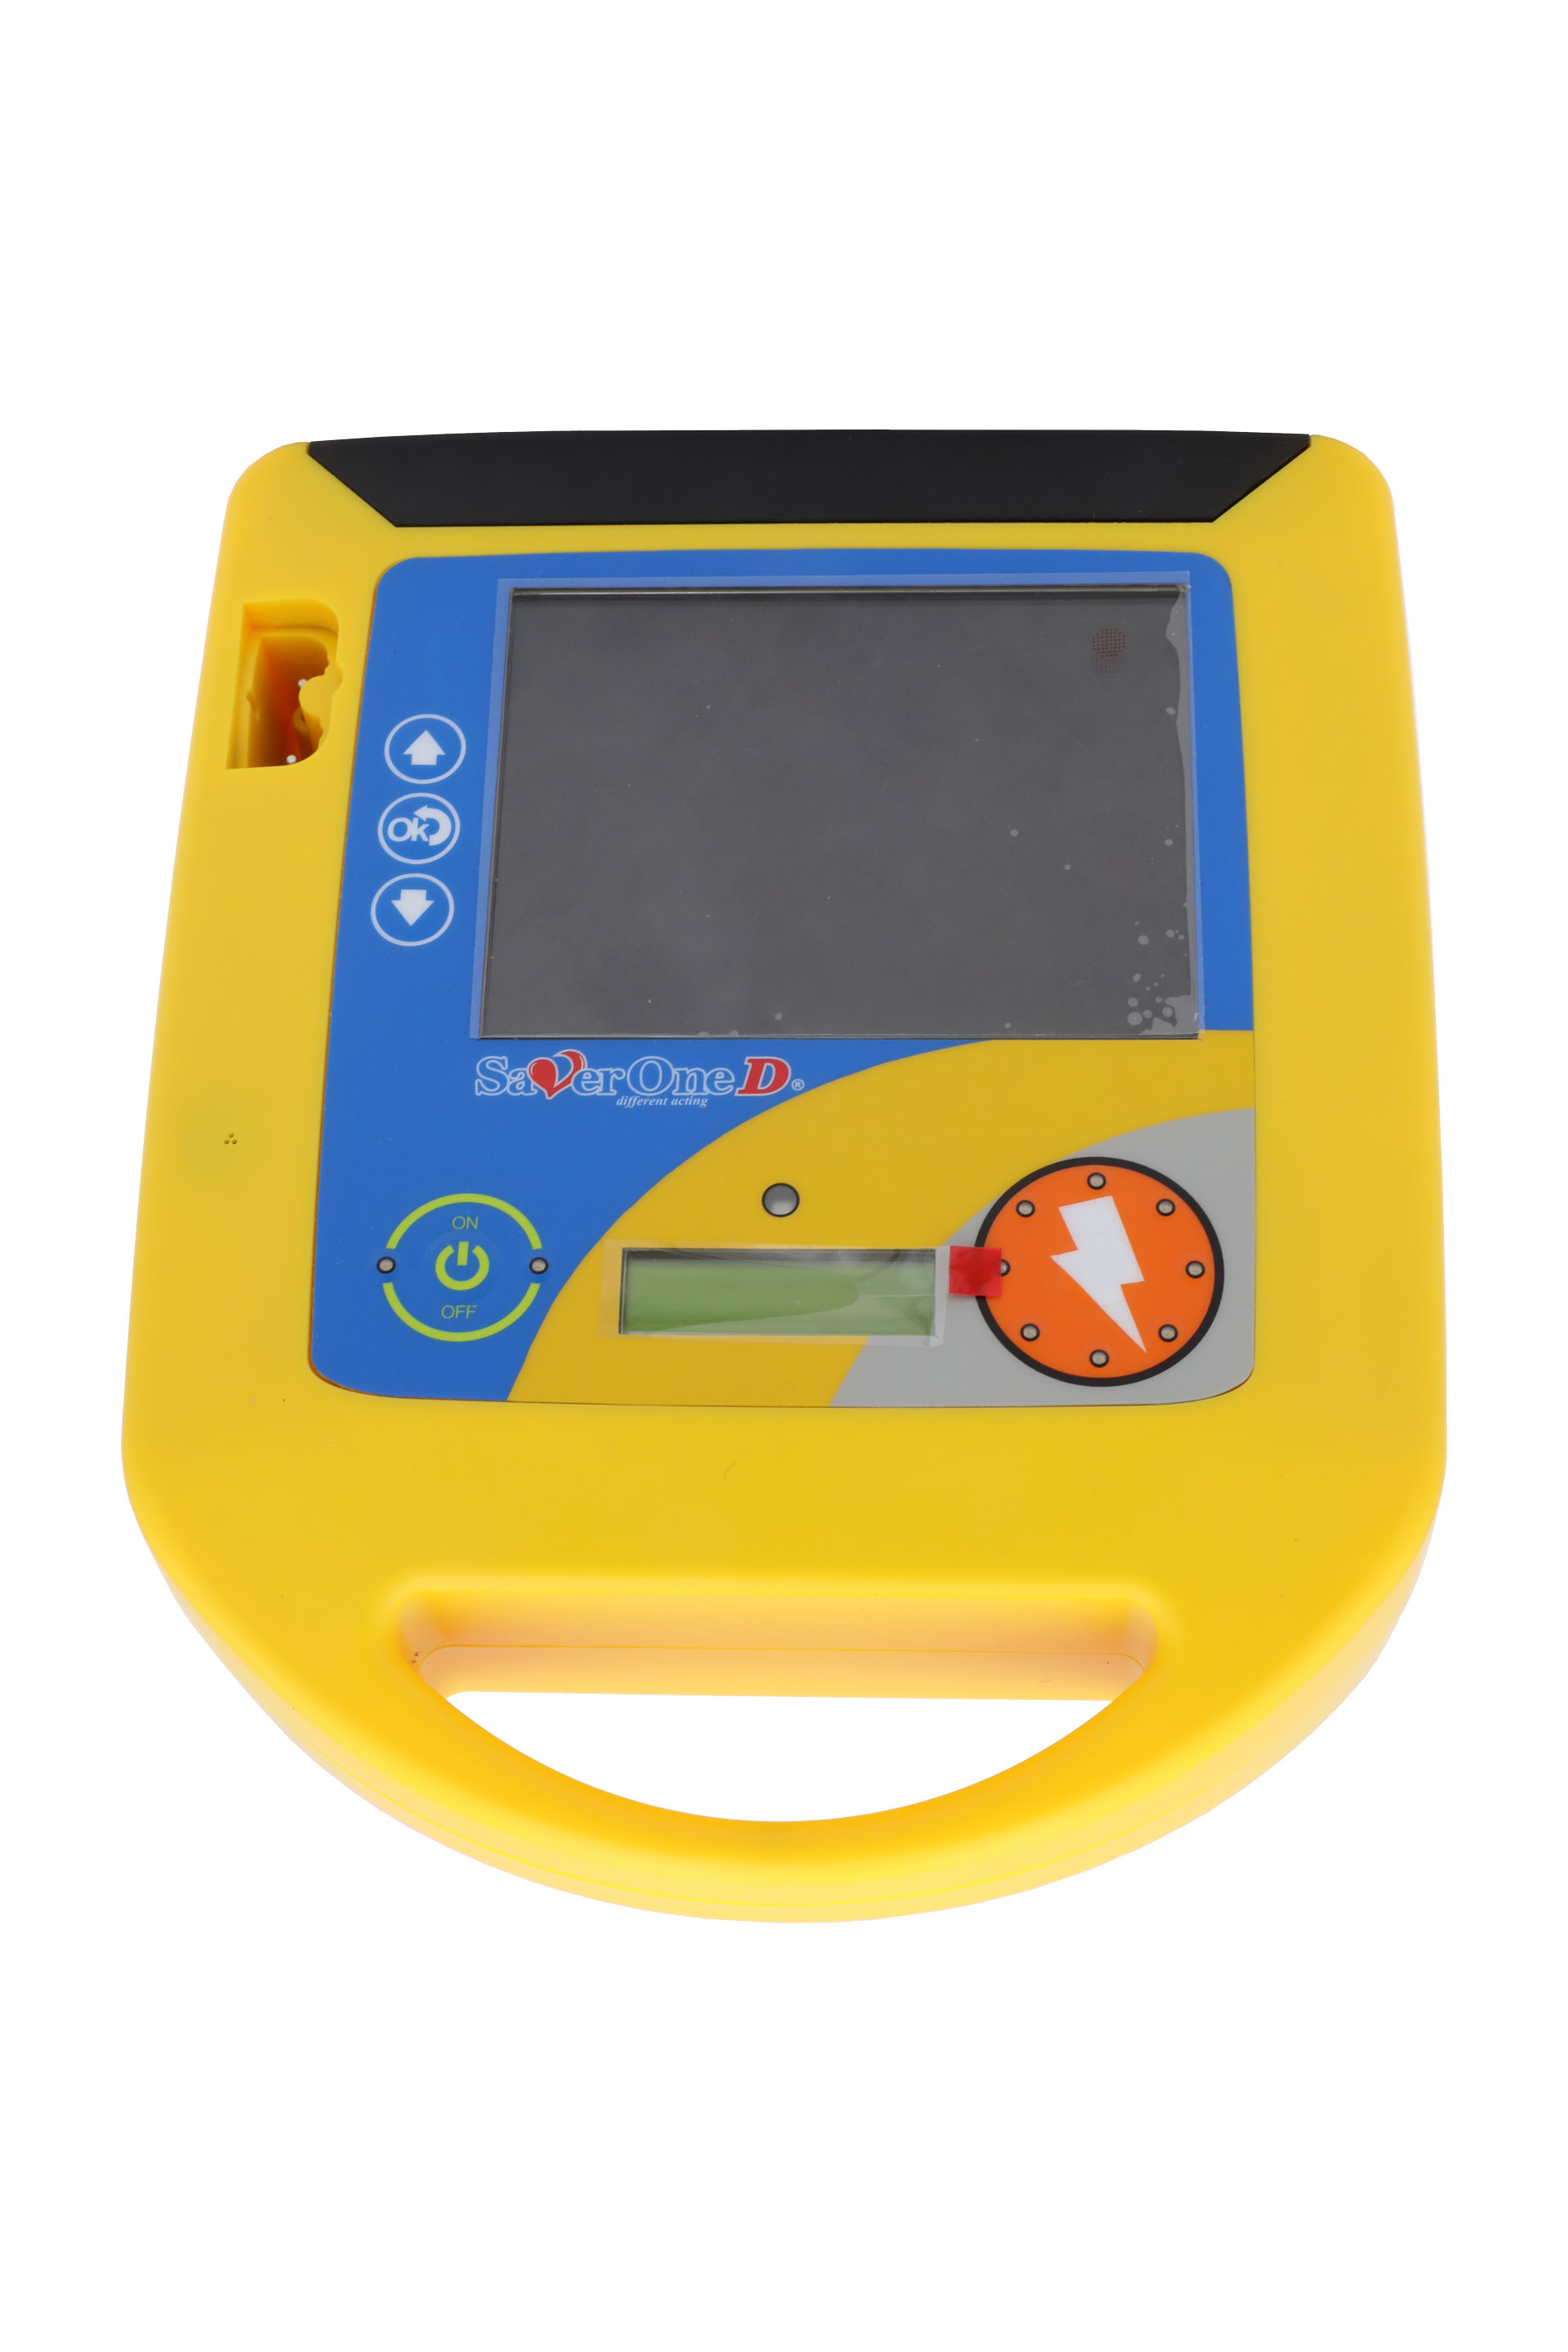 Saver One AED Profi Defibrillator Modell D ohne Upgrade